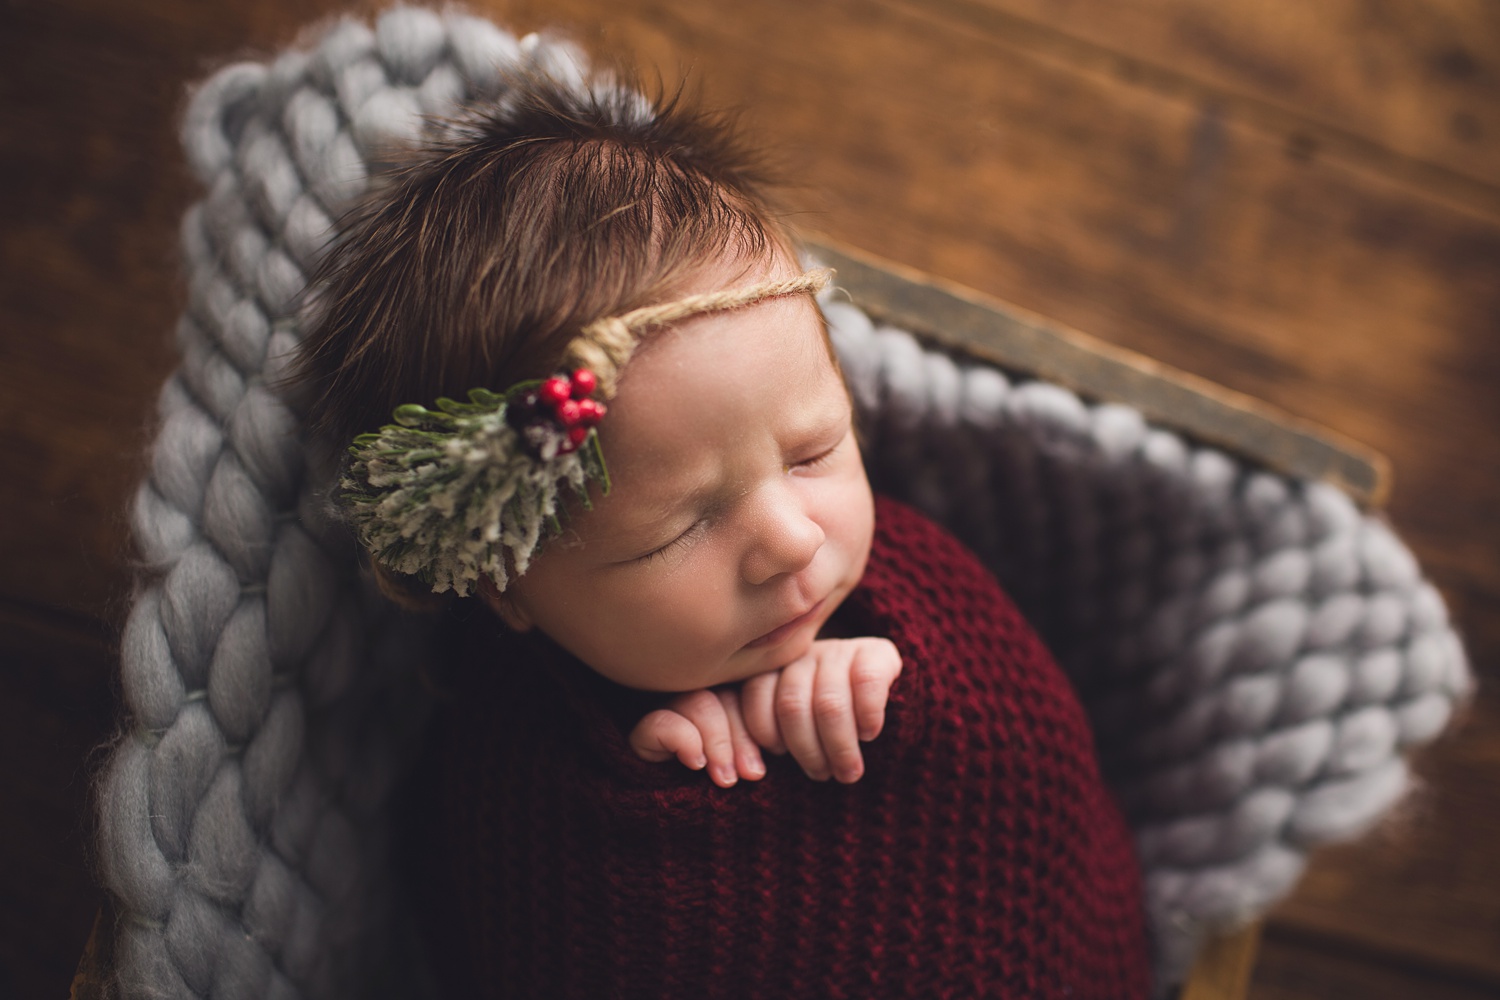 cumberland md newborn baby photographer